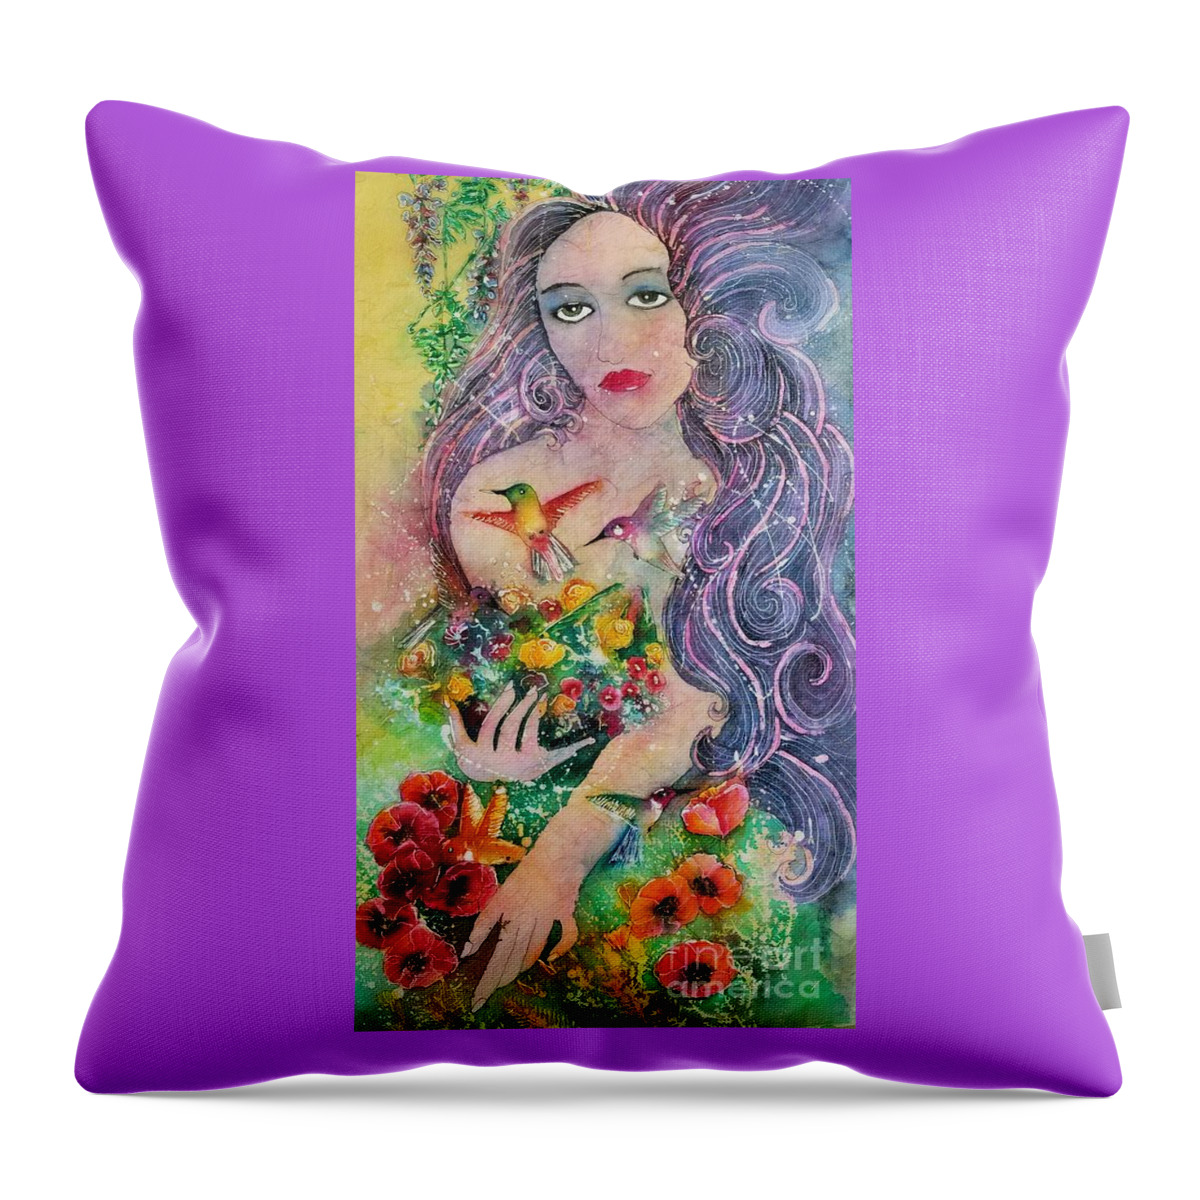 Garden. Goddess Throw Pillow featuring the painting Garden Goddess of the Hummingbird by Carol Losinski Naylor